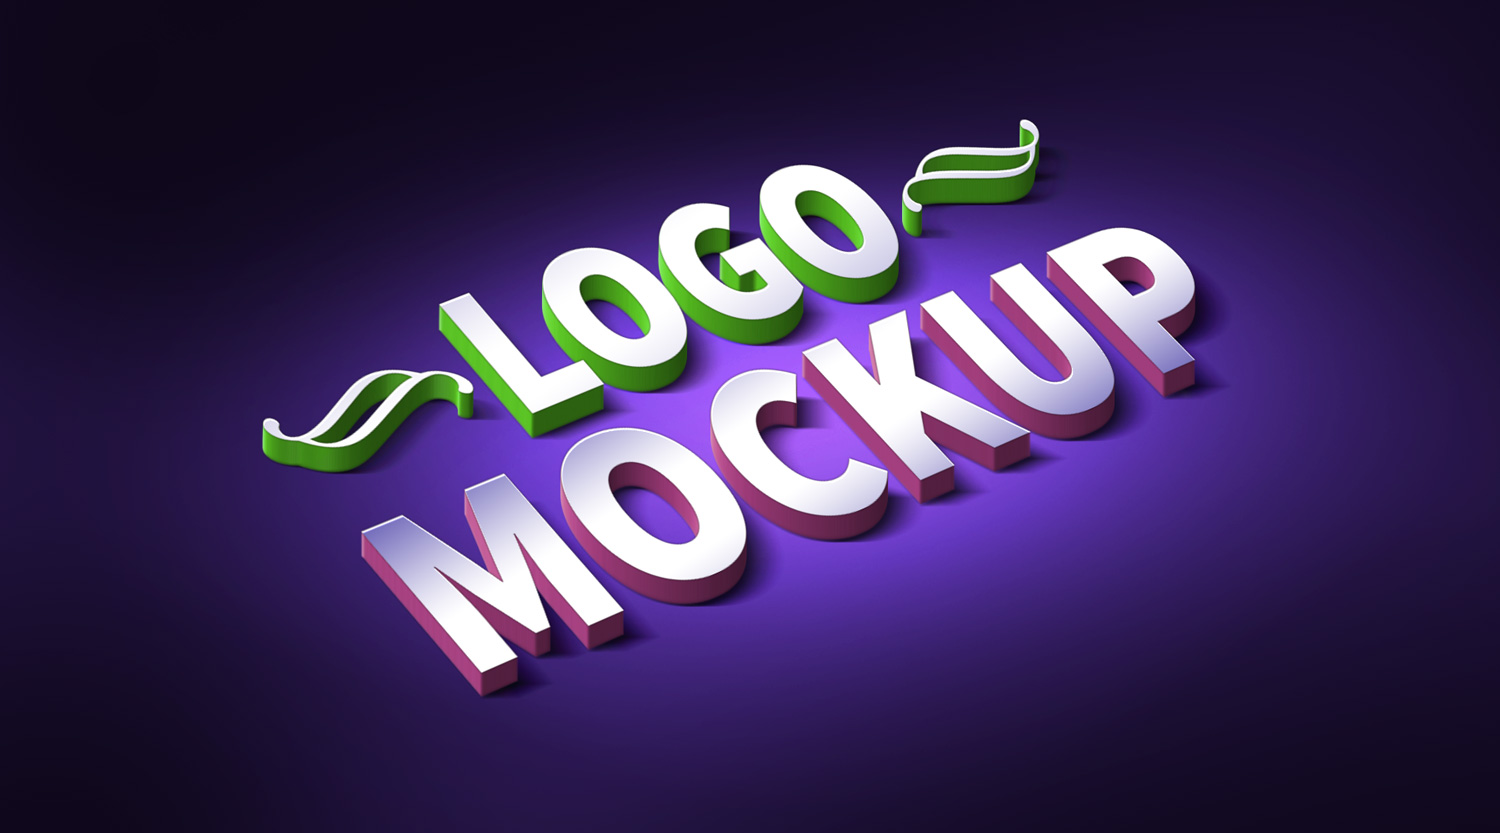 I will create awesome 3d mockup logo design